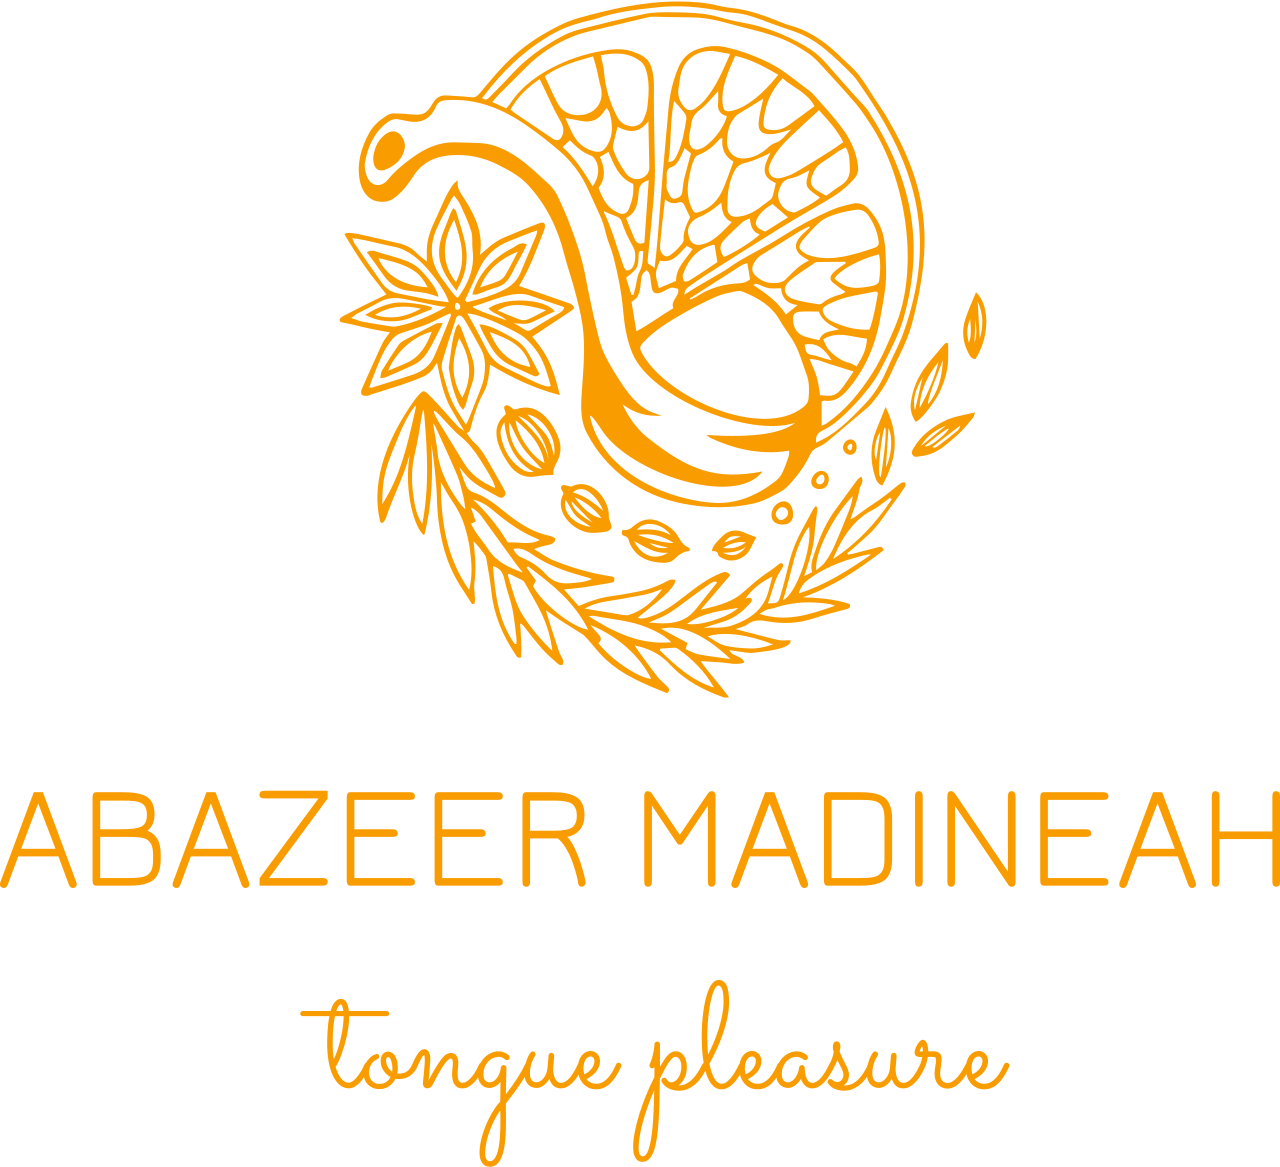 ABAZEER MADINEAH 's web page